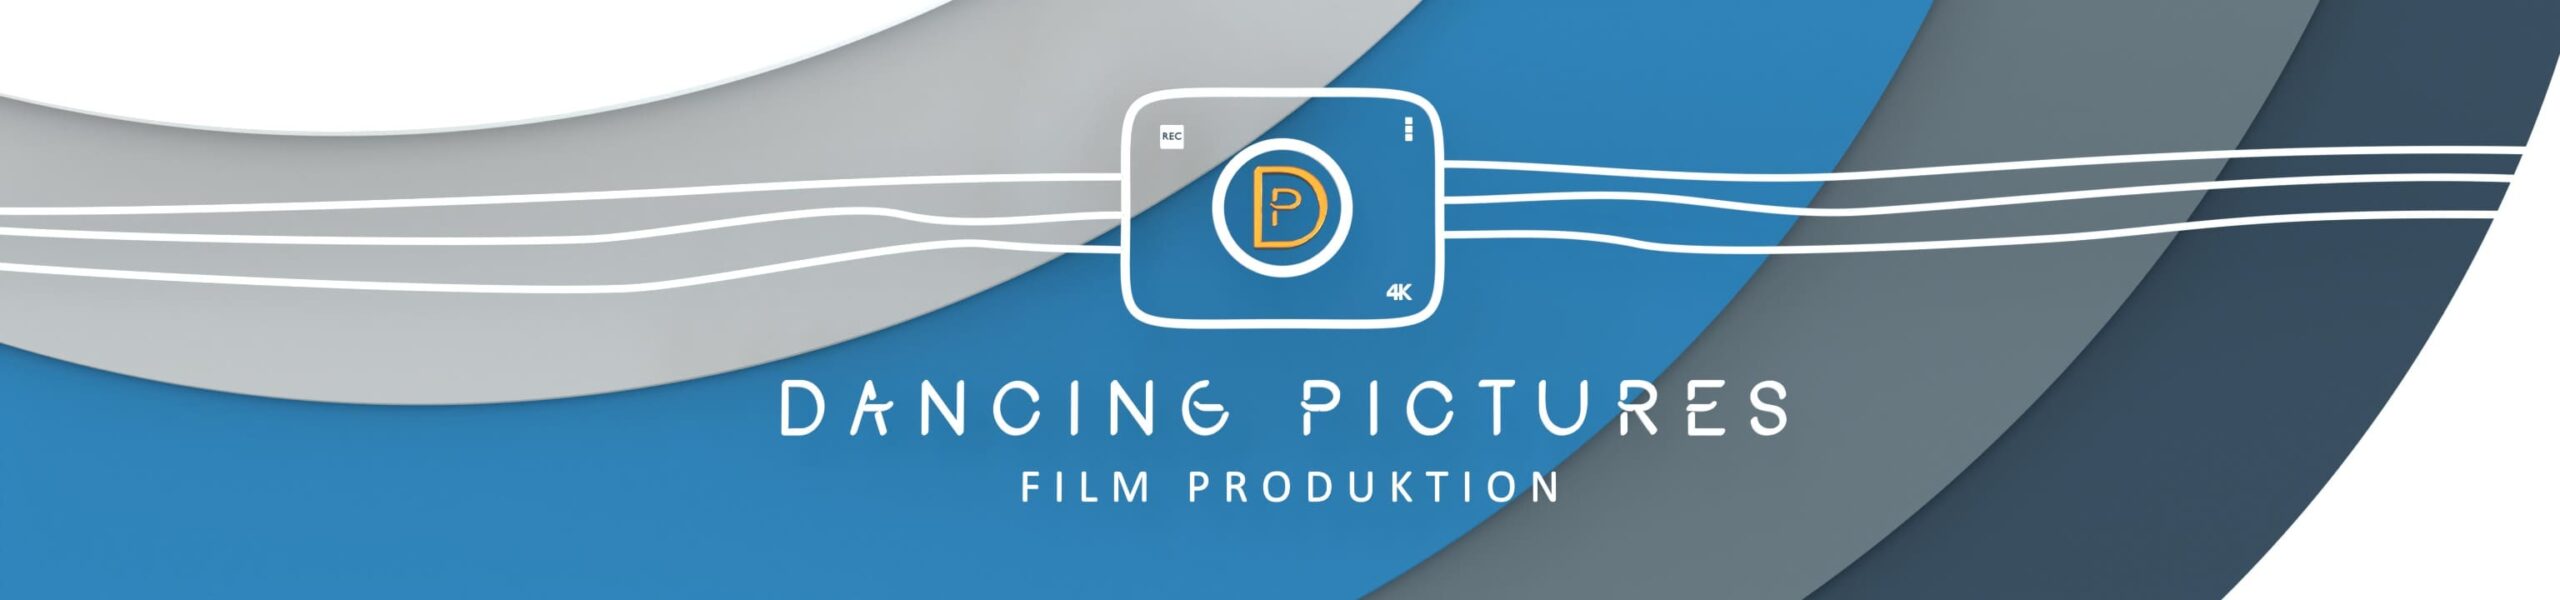 Filmproduktion Dancing Pictures